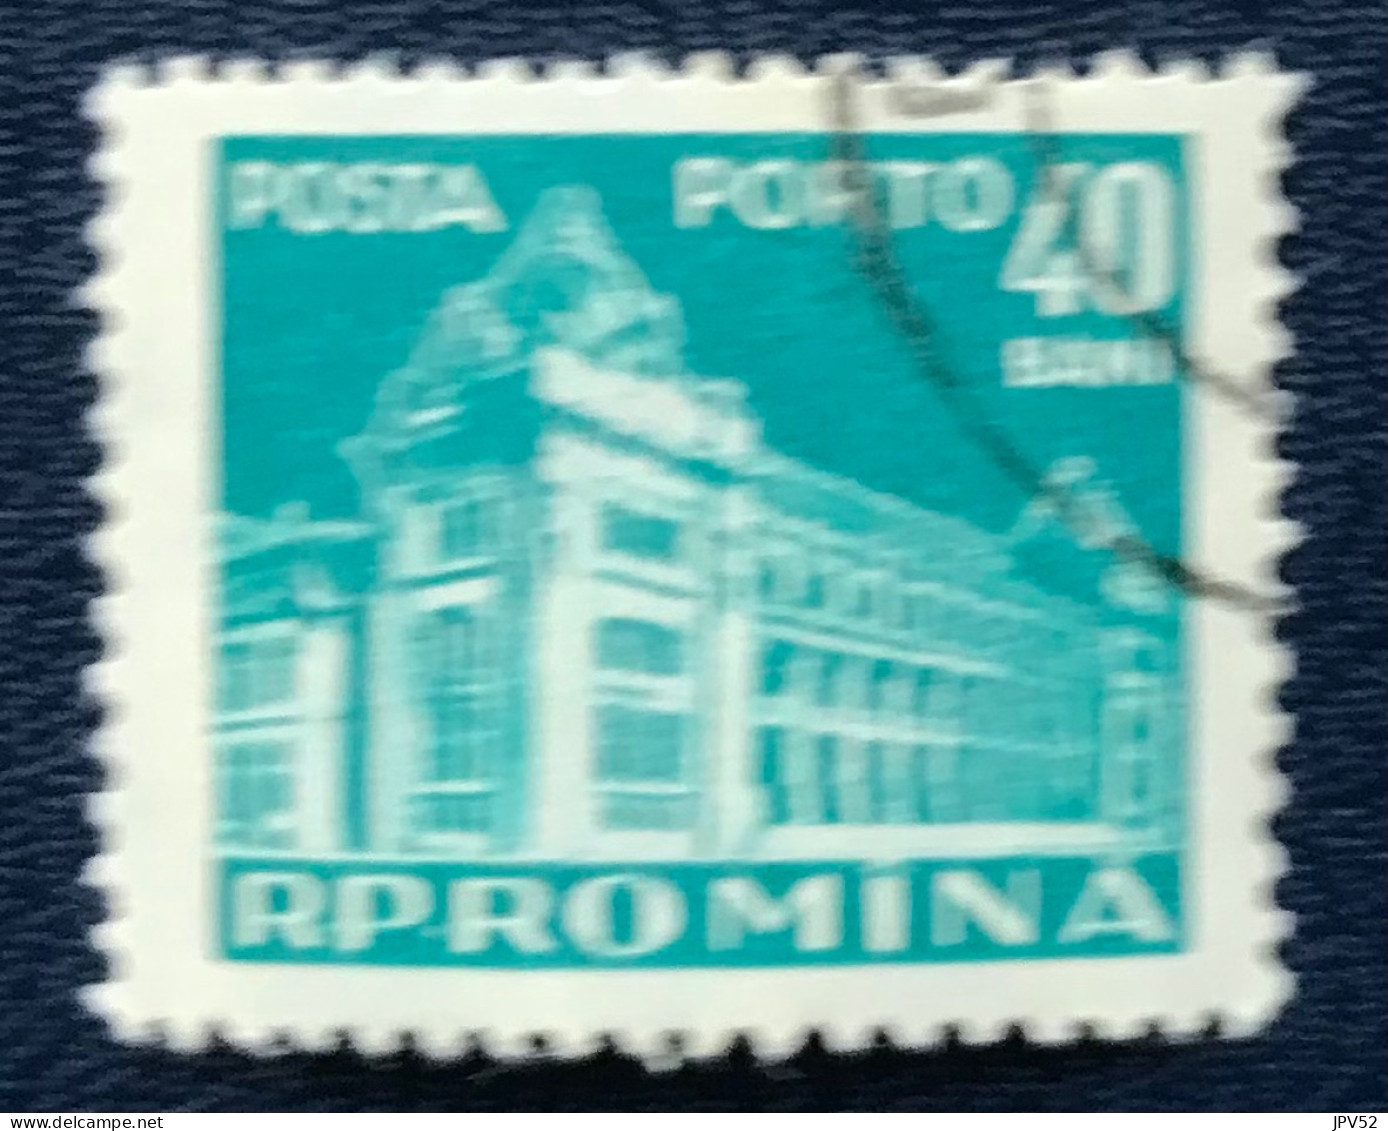 Romana - Roemenië - C14/55 - 1957 - (°)used - Michel 105 - Postkantoor - Strafport